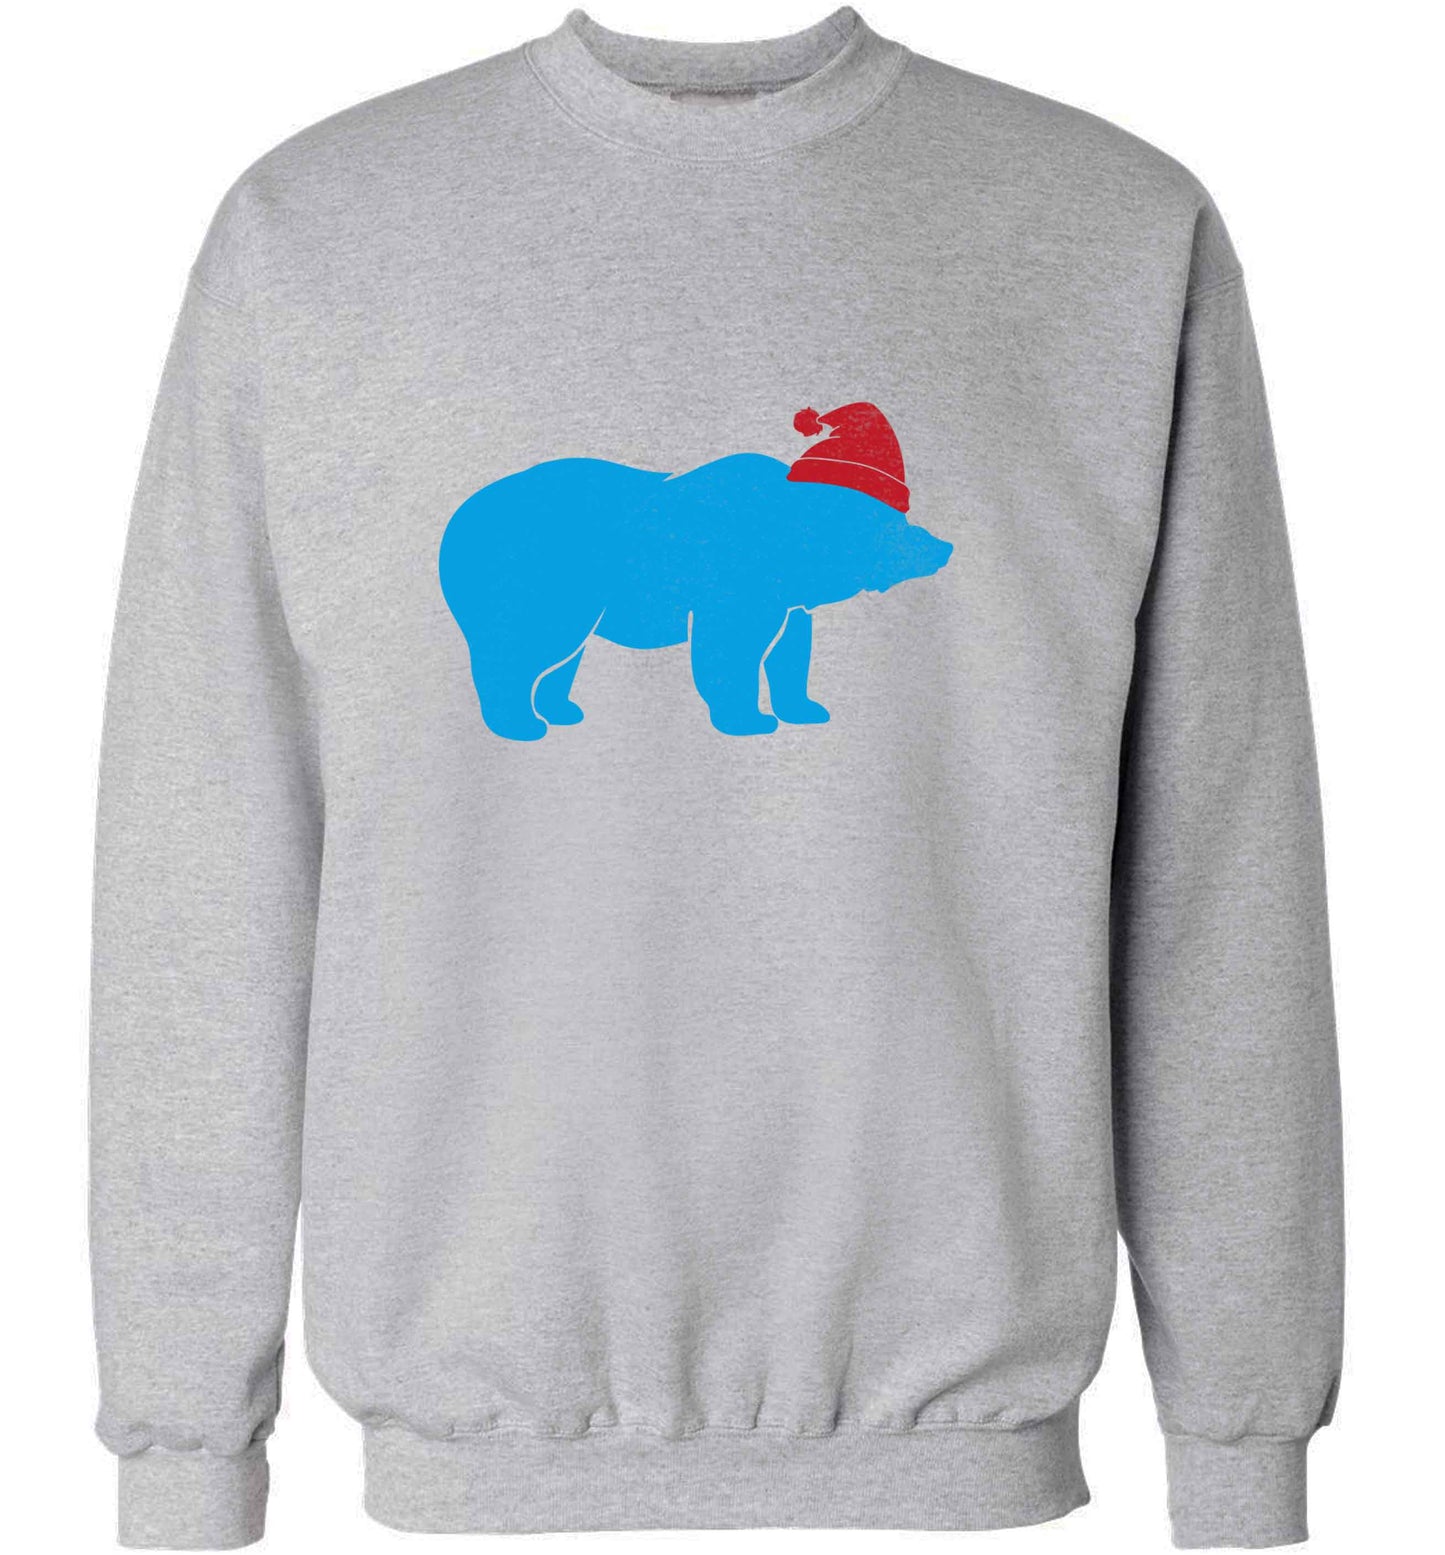 Blue bear Santa adult's unisex grey sweater 2XL